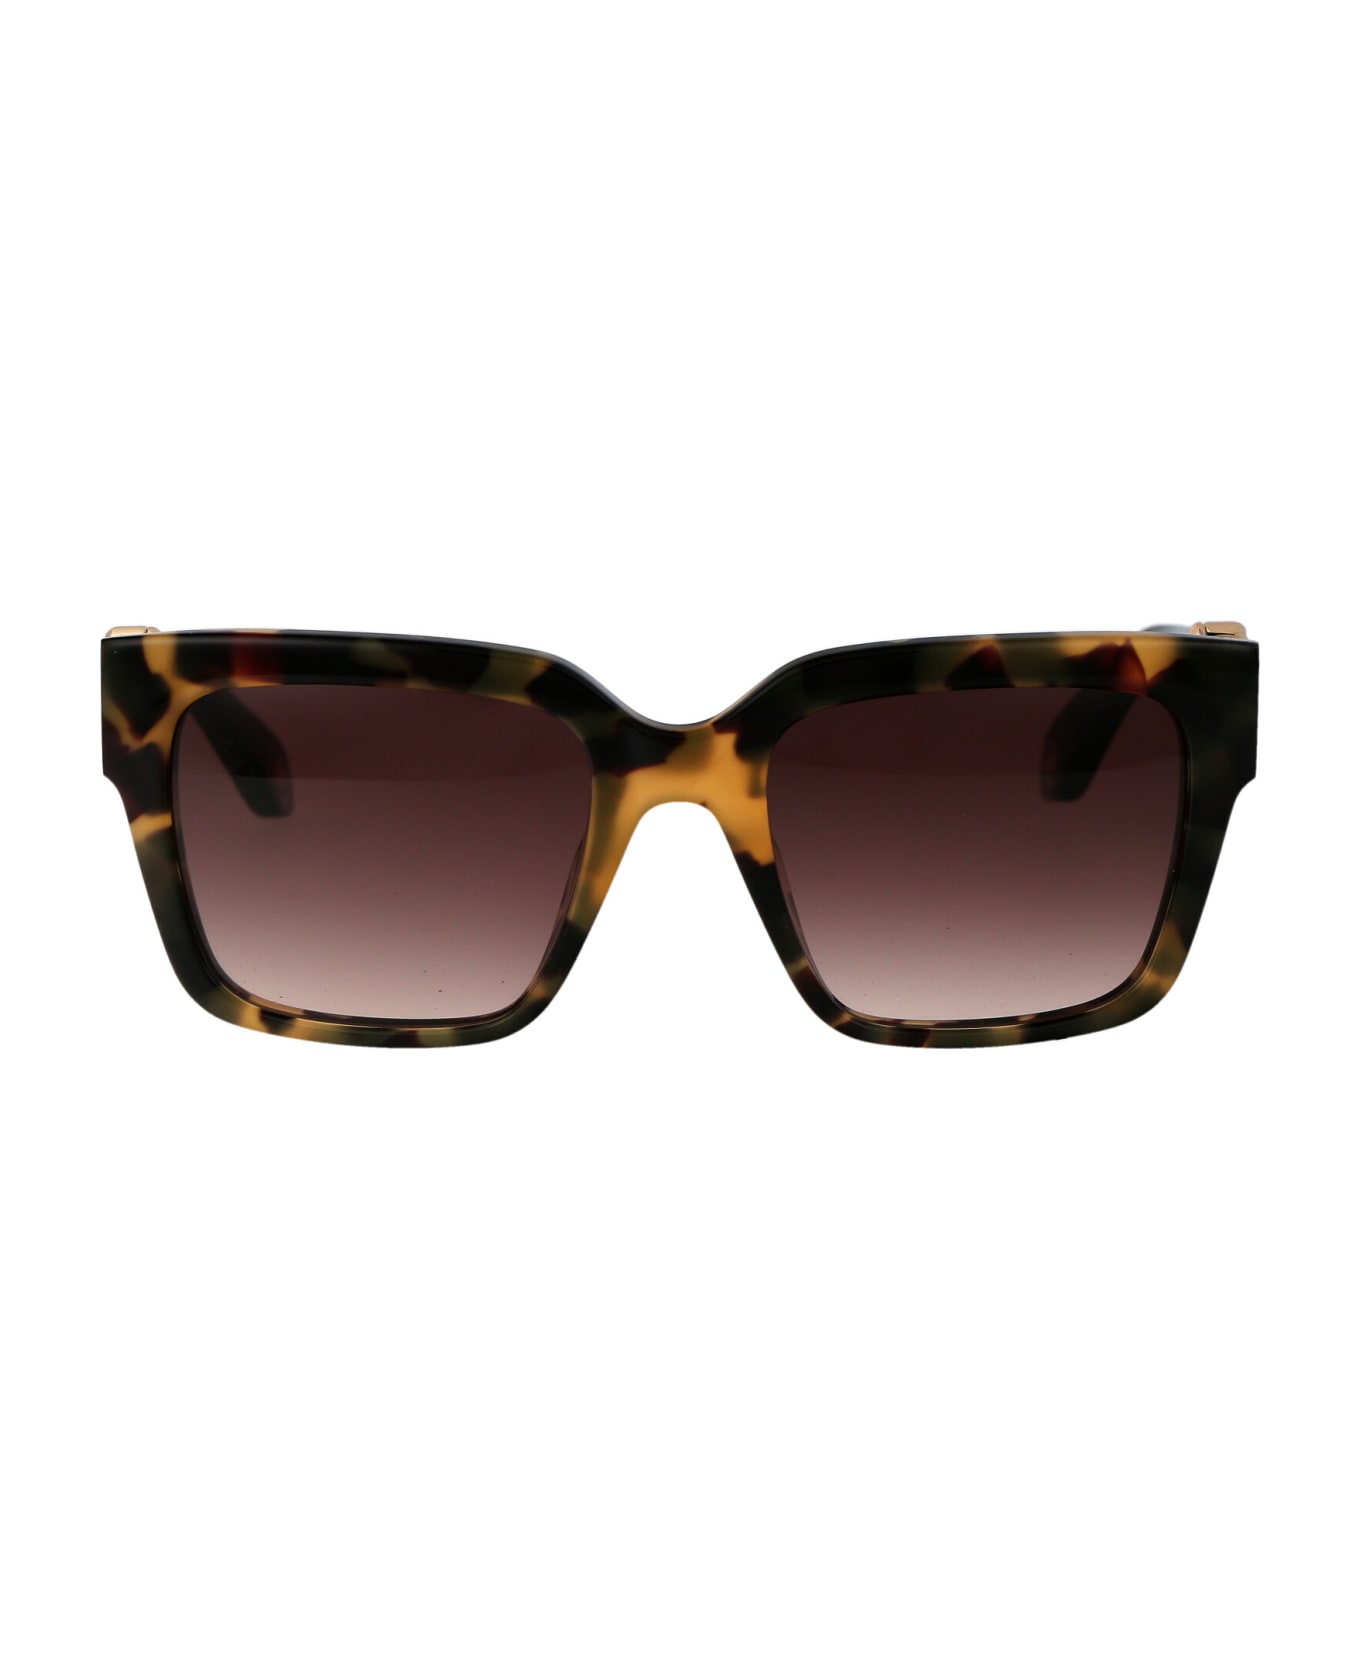 Roberto Cavalli Src040m Sunglasses - 0AGG BROWN サングラス